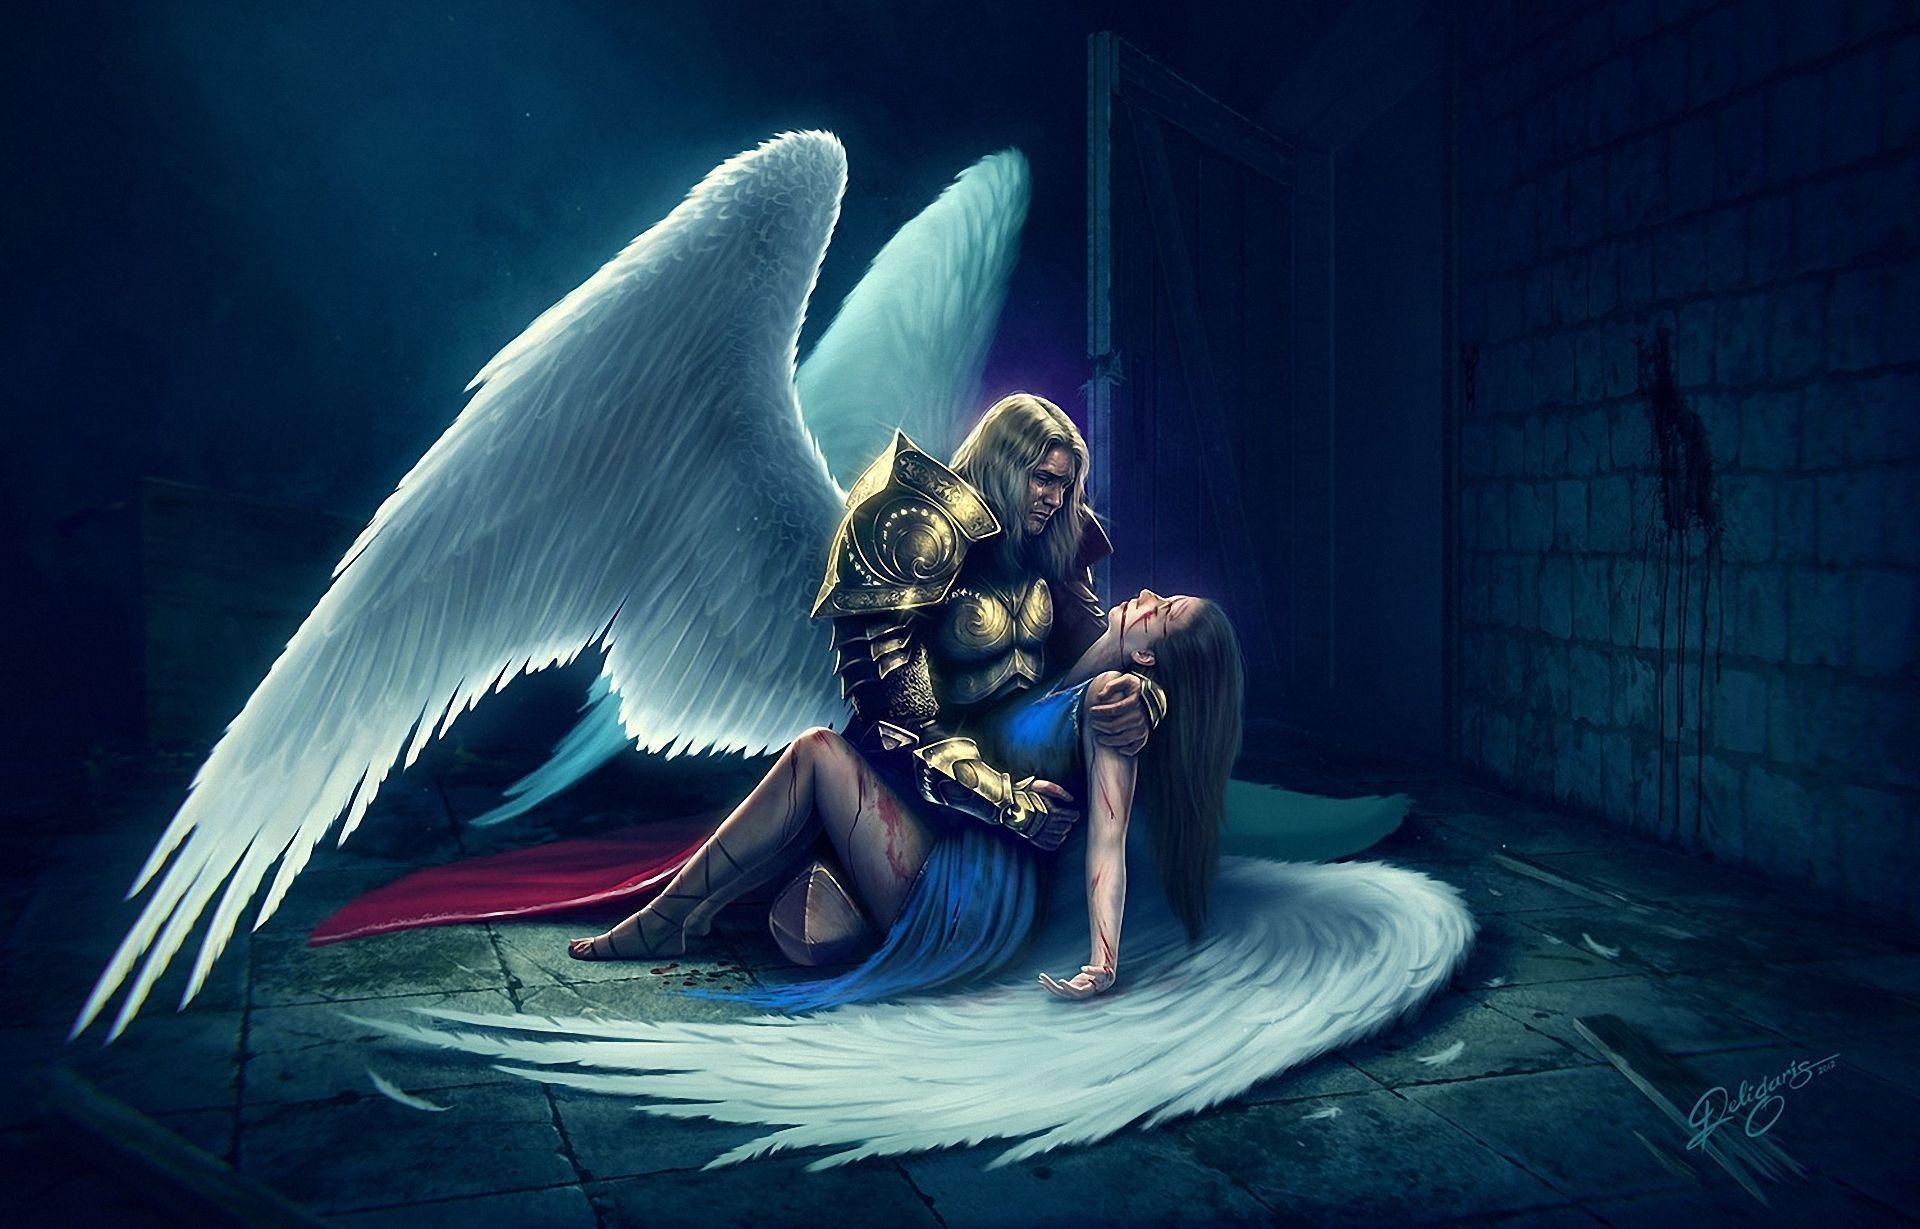 Angel Men Wings Armor Fantasy Girl mood sad death love wallpapers